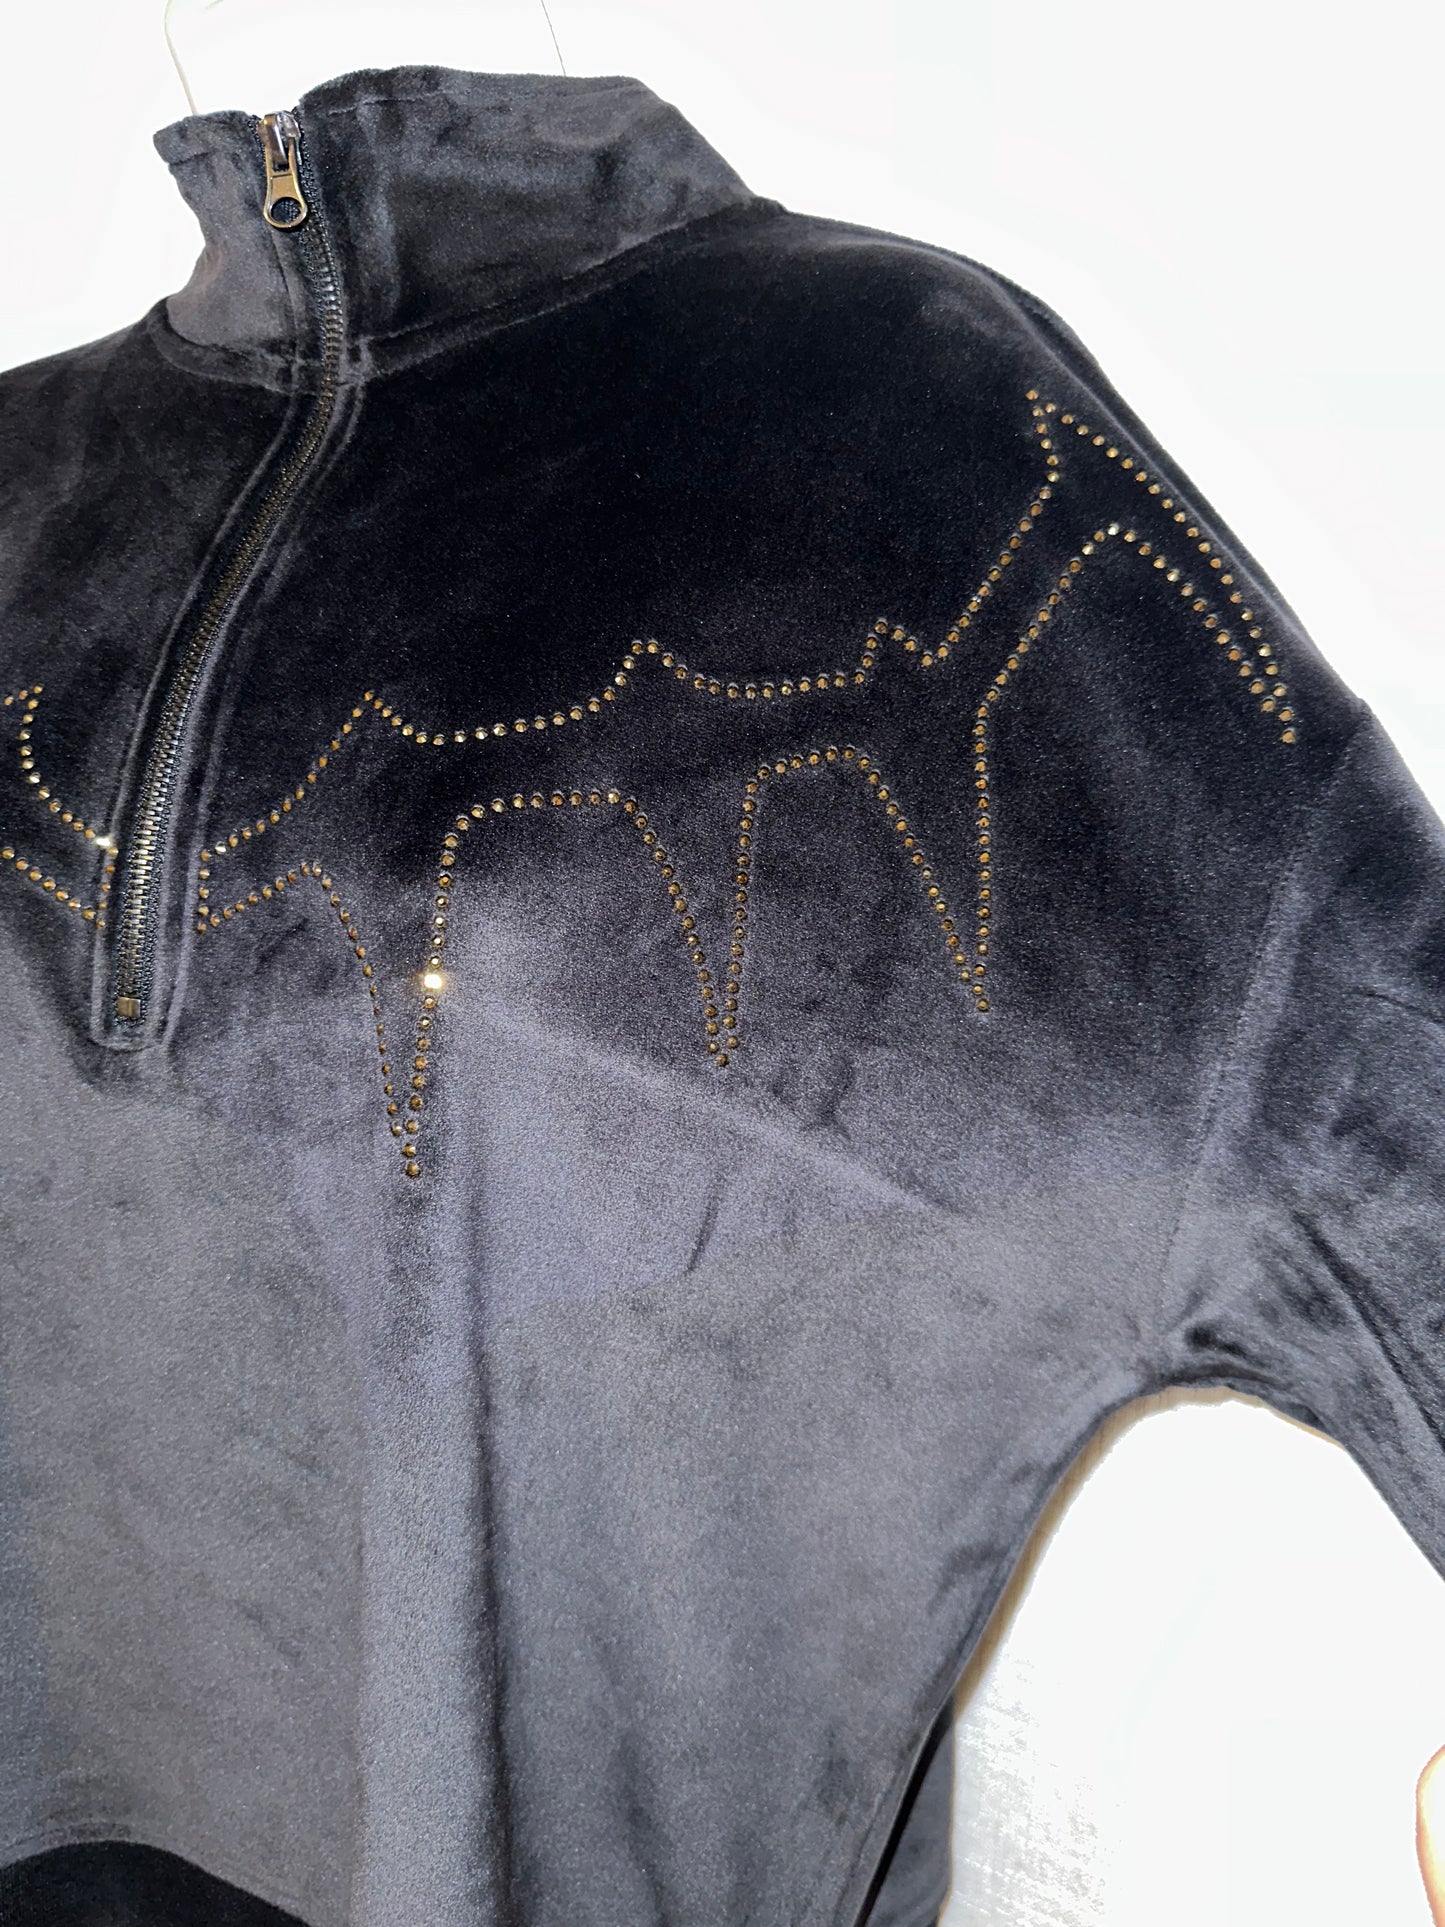 Rhinestone Velour Track Suit (Custom)